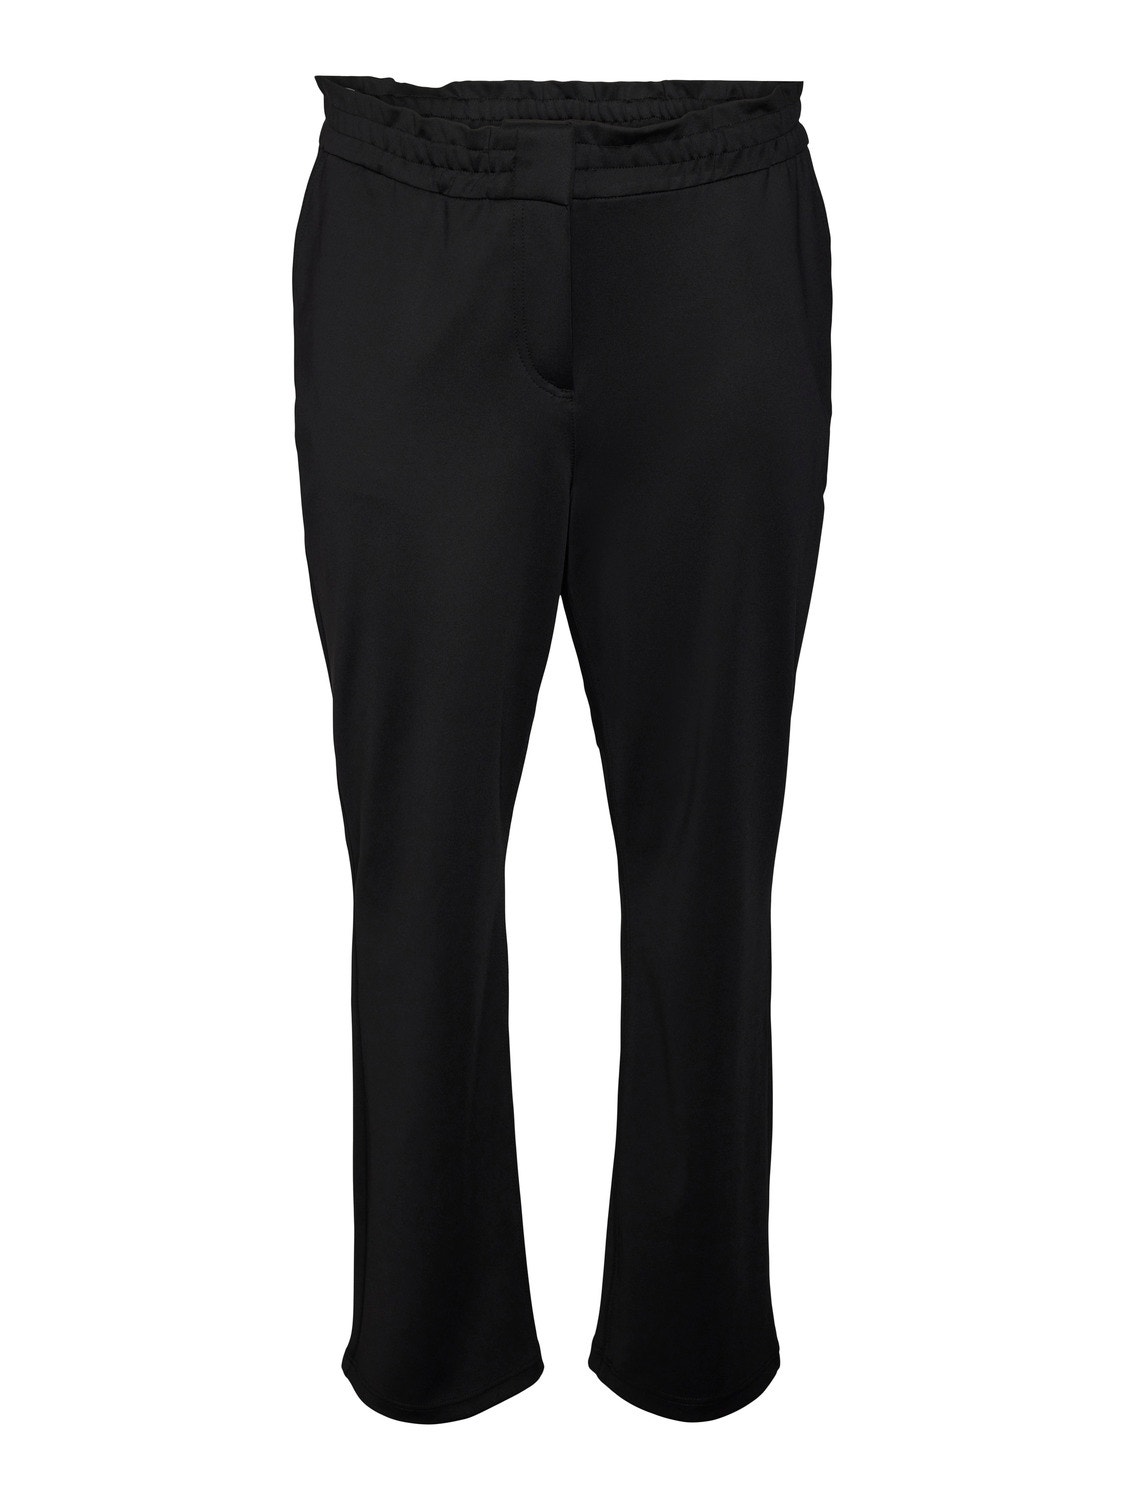 Vero Moda VMCCADENCE Mid rise Trousers -Black - 10302197